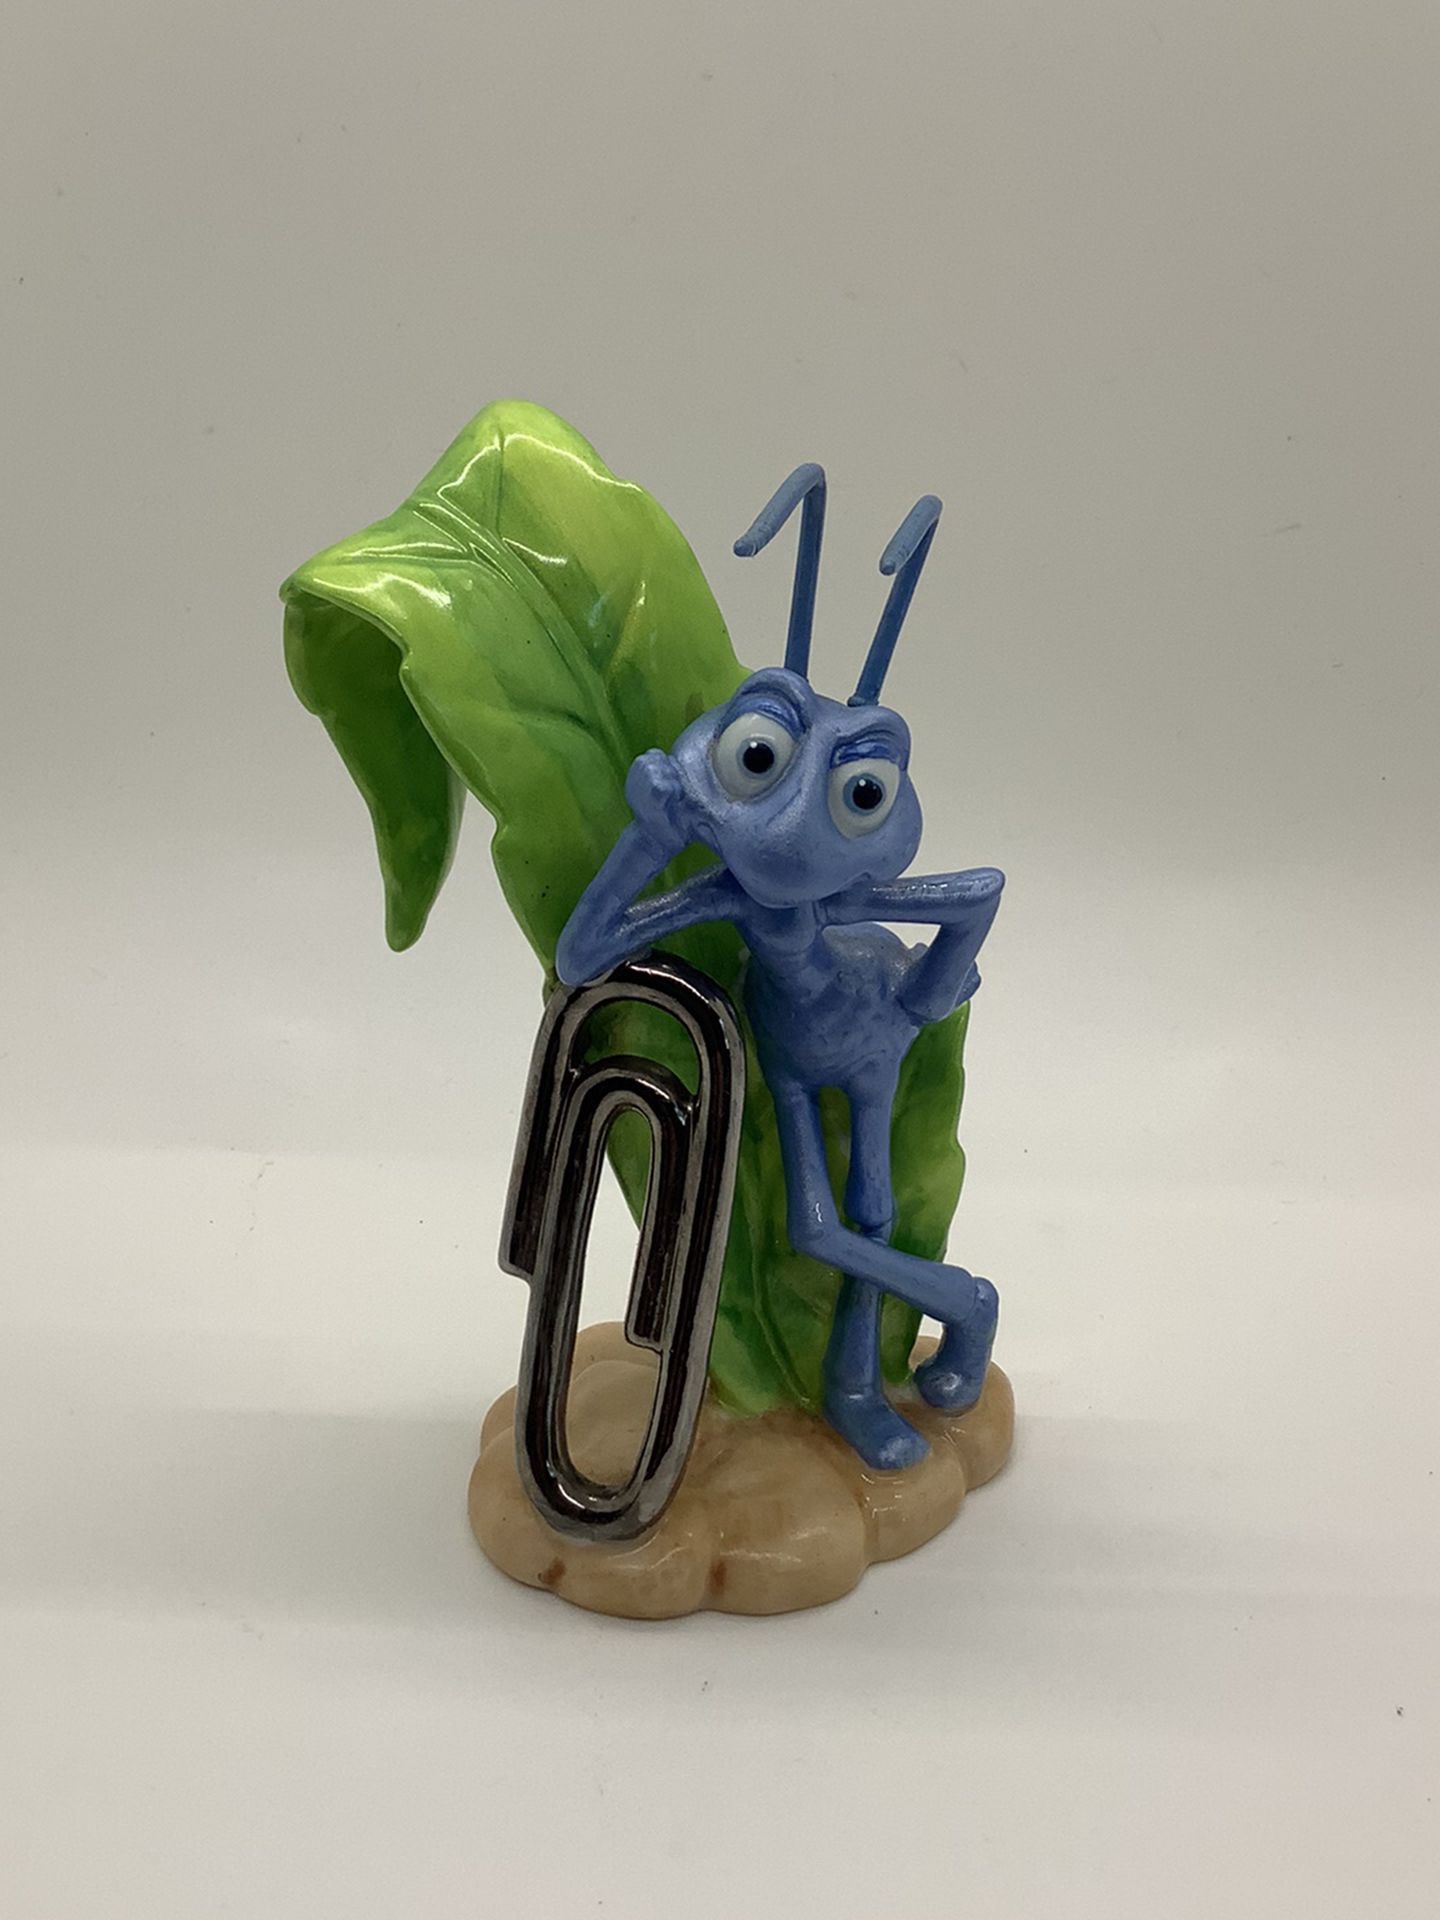 A Bugs Life Flick Figurine